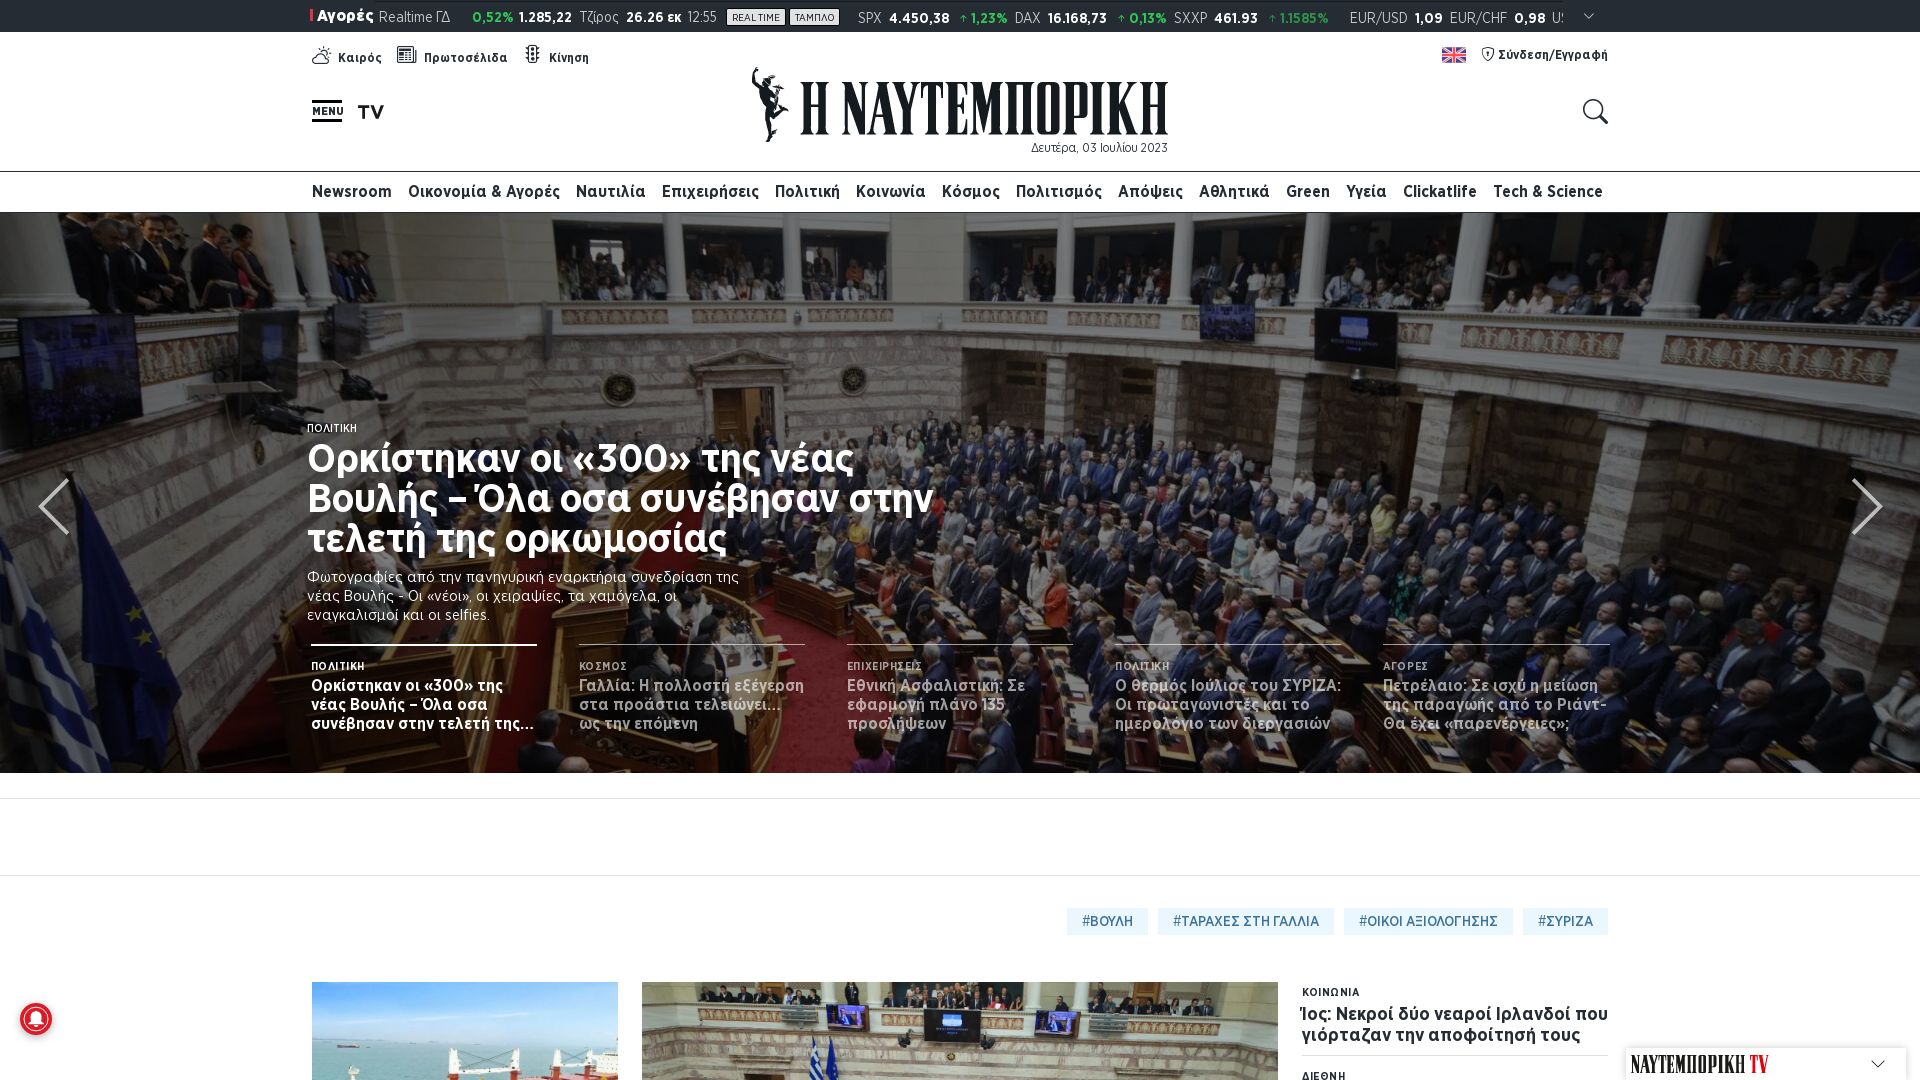 вебсайт naftemporiki.gr Є   ONLINE